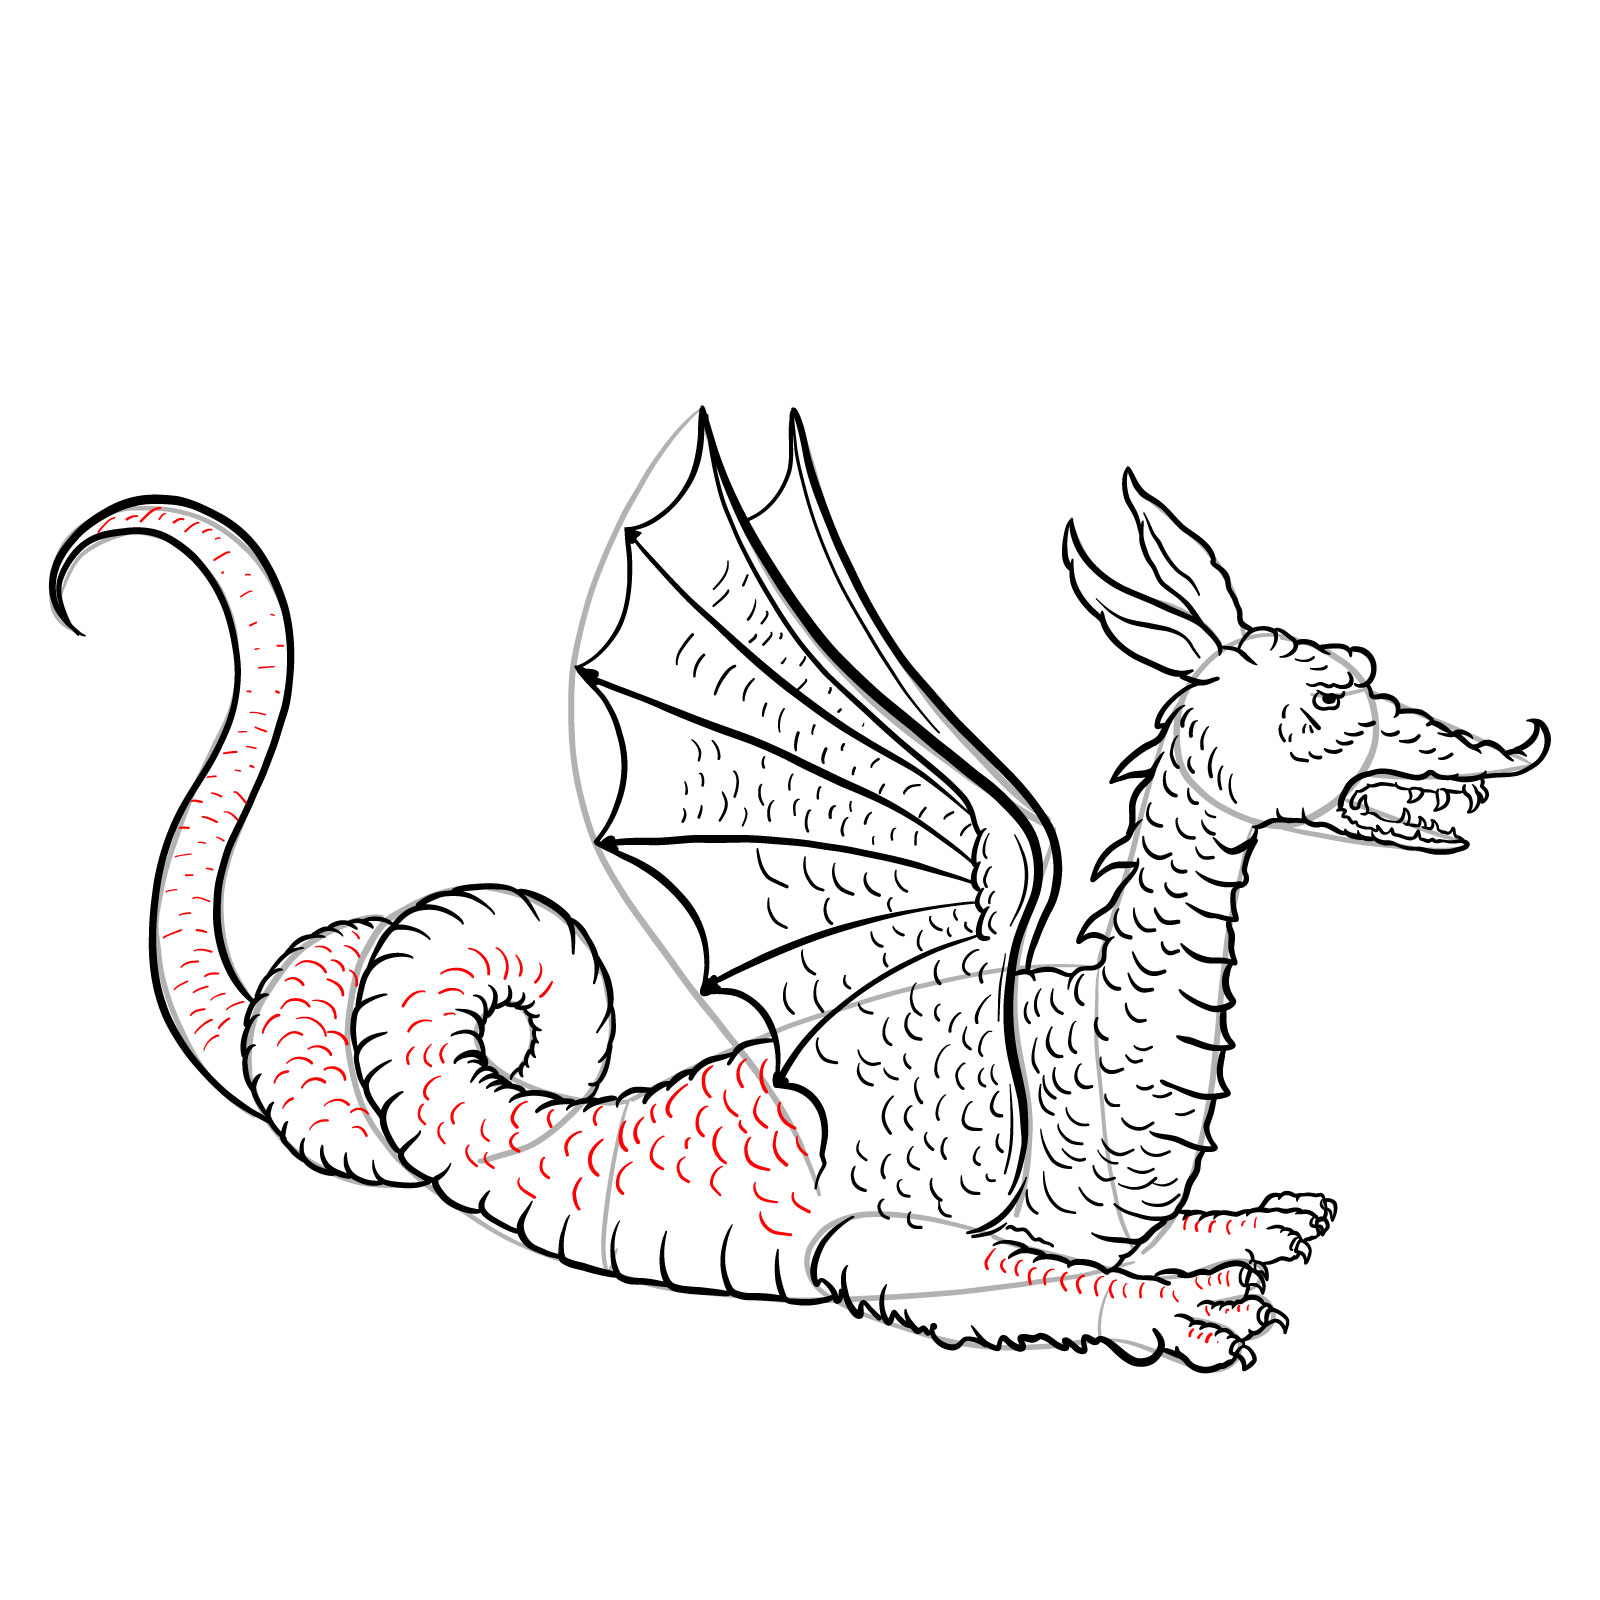 How to draw a Knucker dragon - step 32